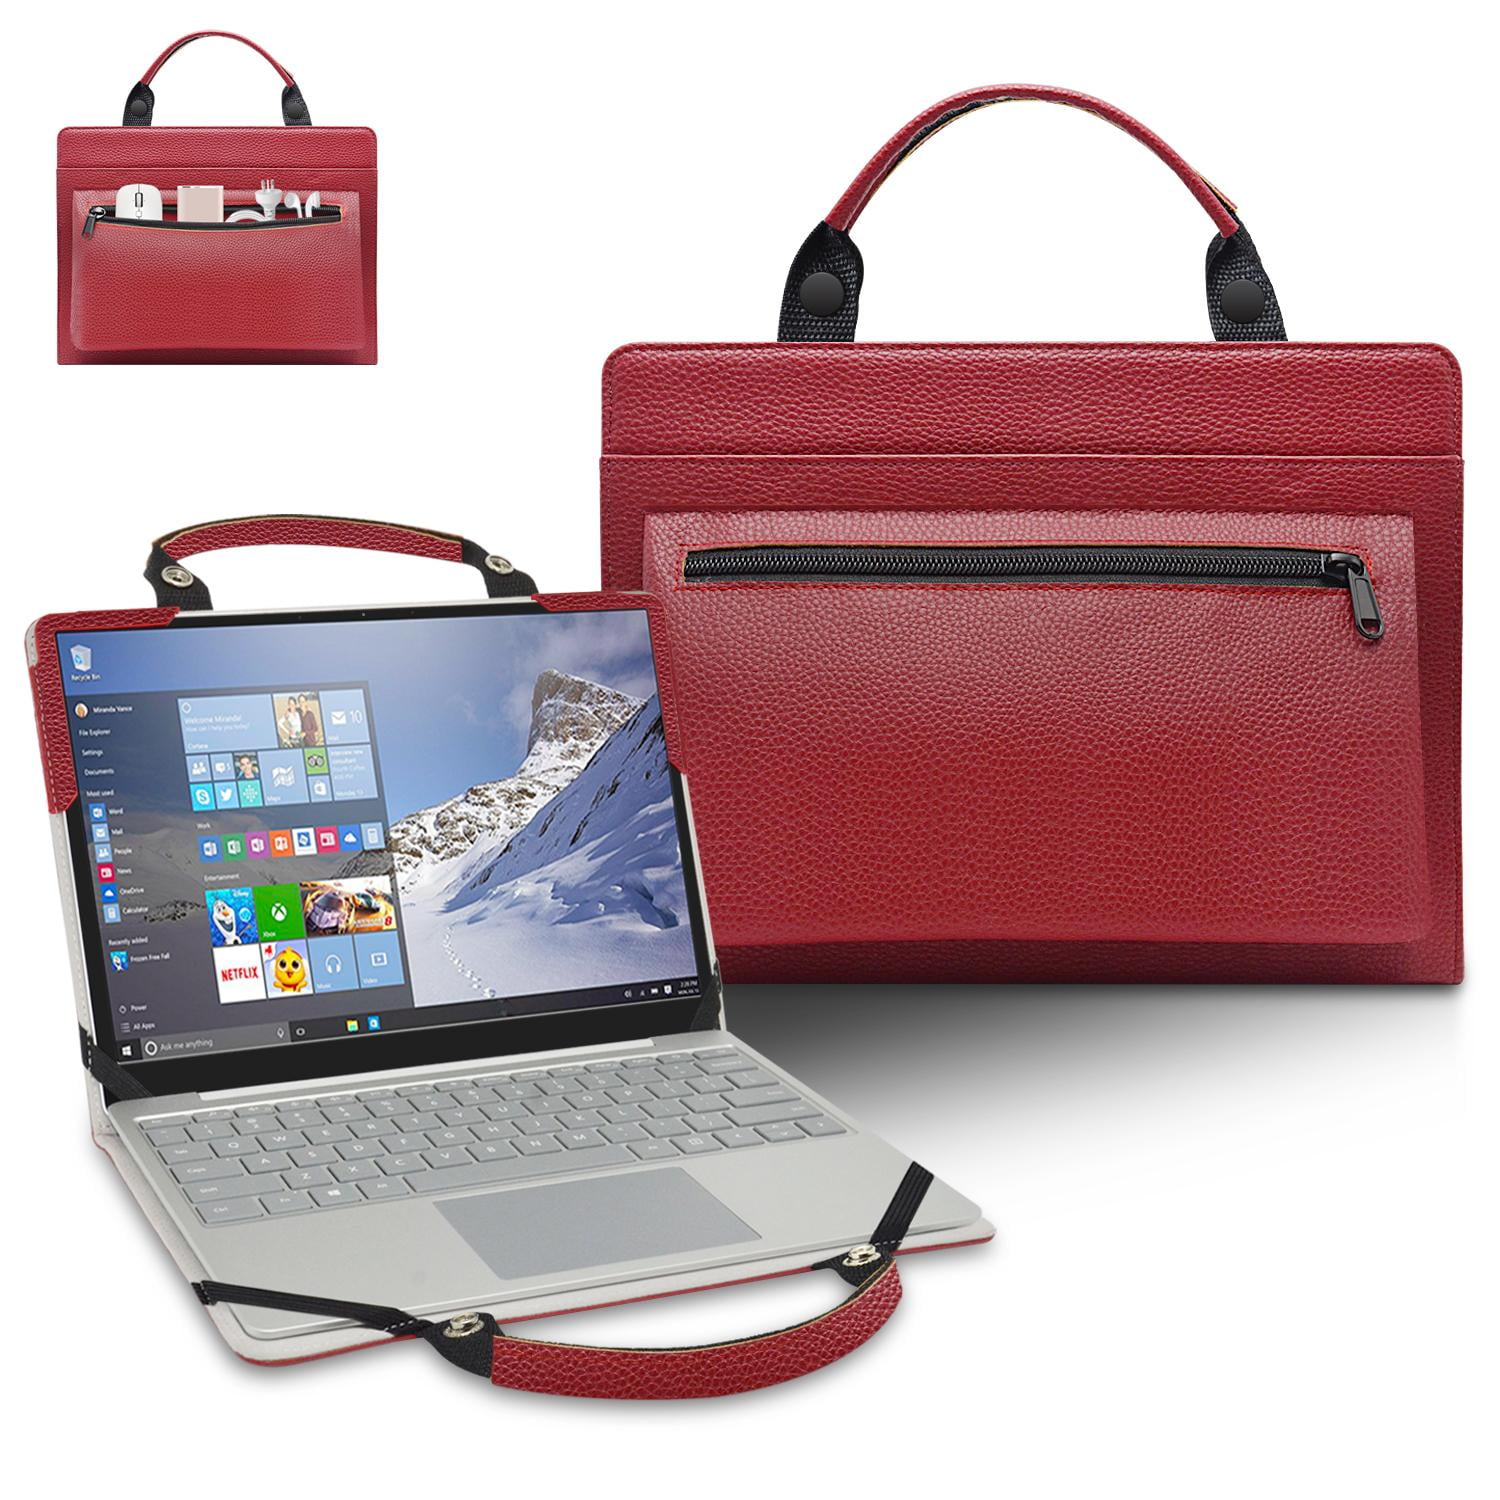 VanGoddy Laptop Sleeve Case Shoulder Bag For 13.3" MacBook Air Pro/ HP ENVY x360 